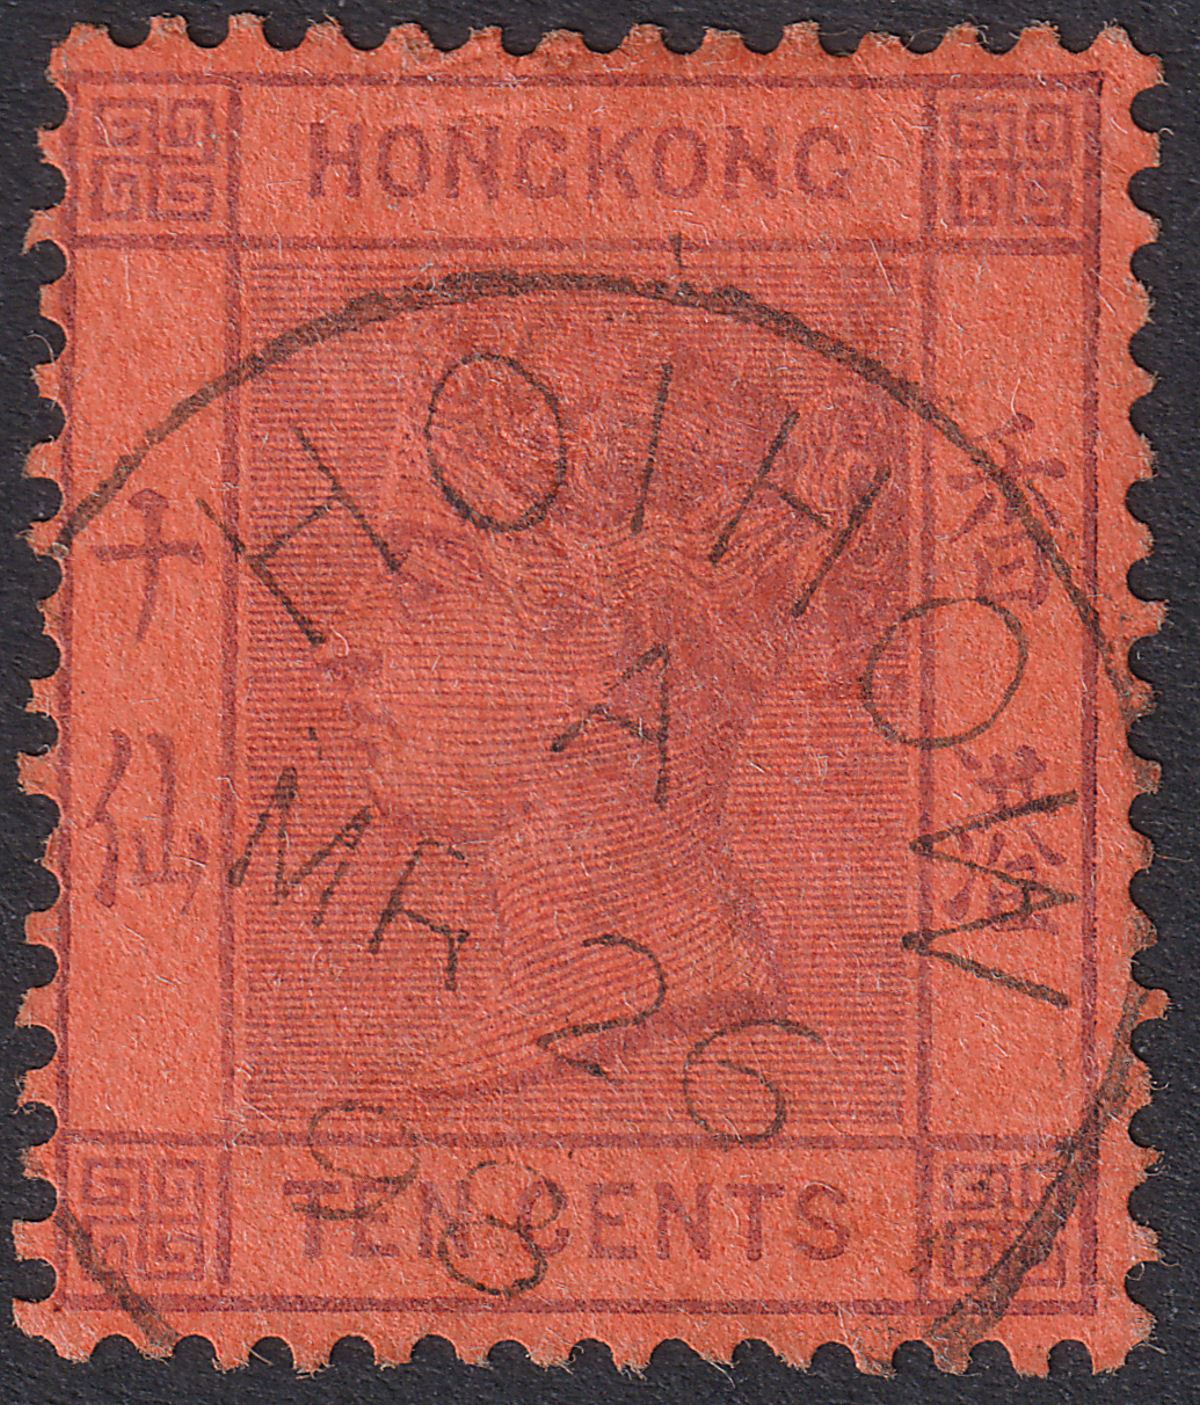 Hong Kong 1898 QV 10c Used HOIHOW Code A Postmark Webb Type E SG Z569 cat £60